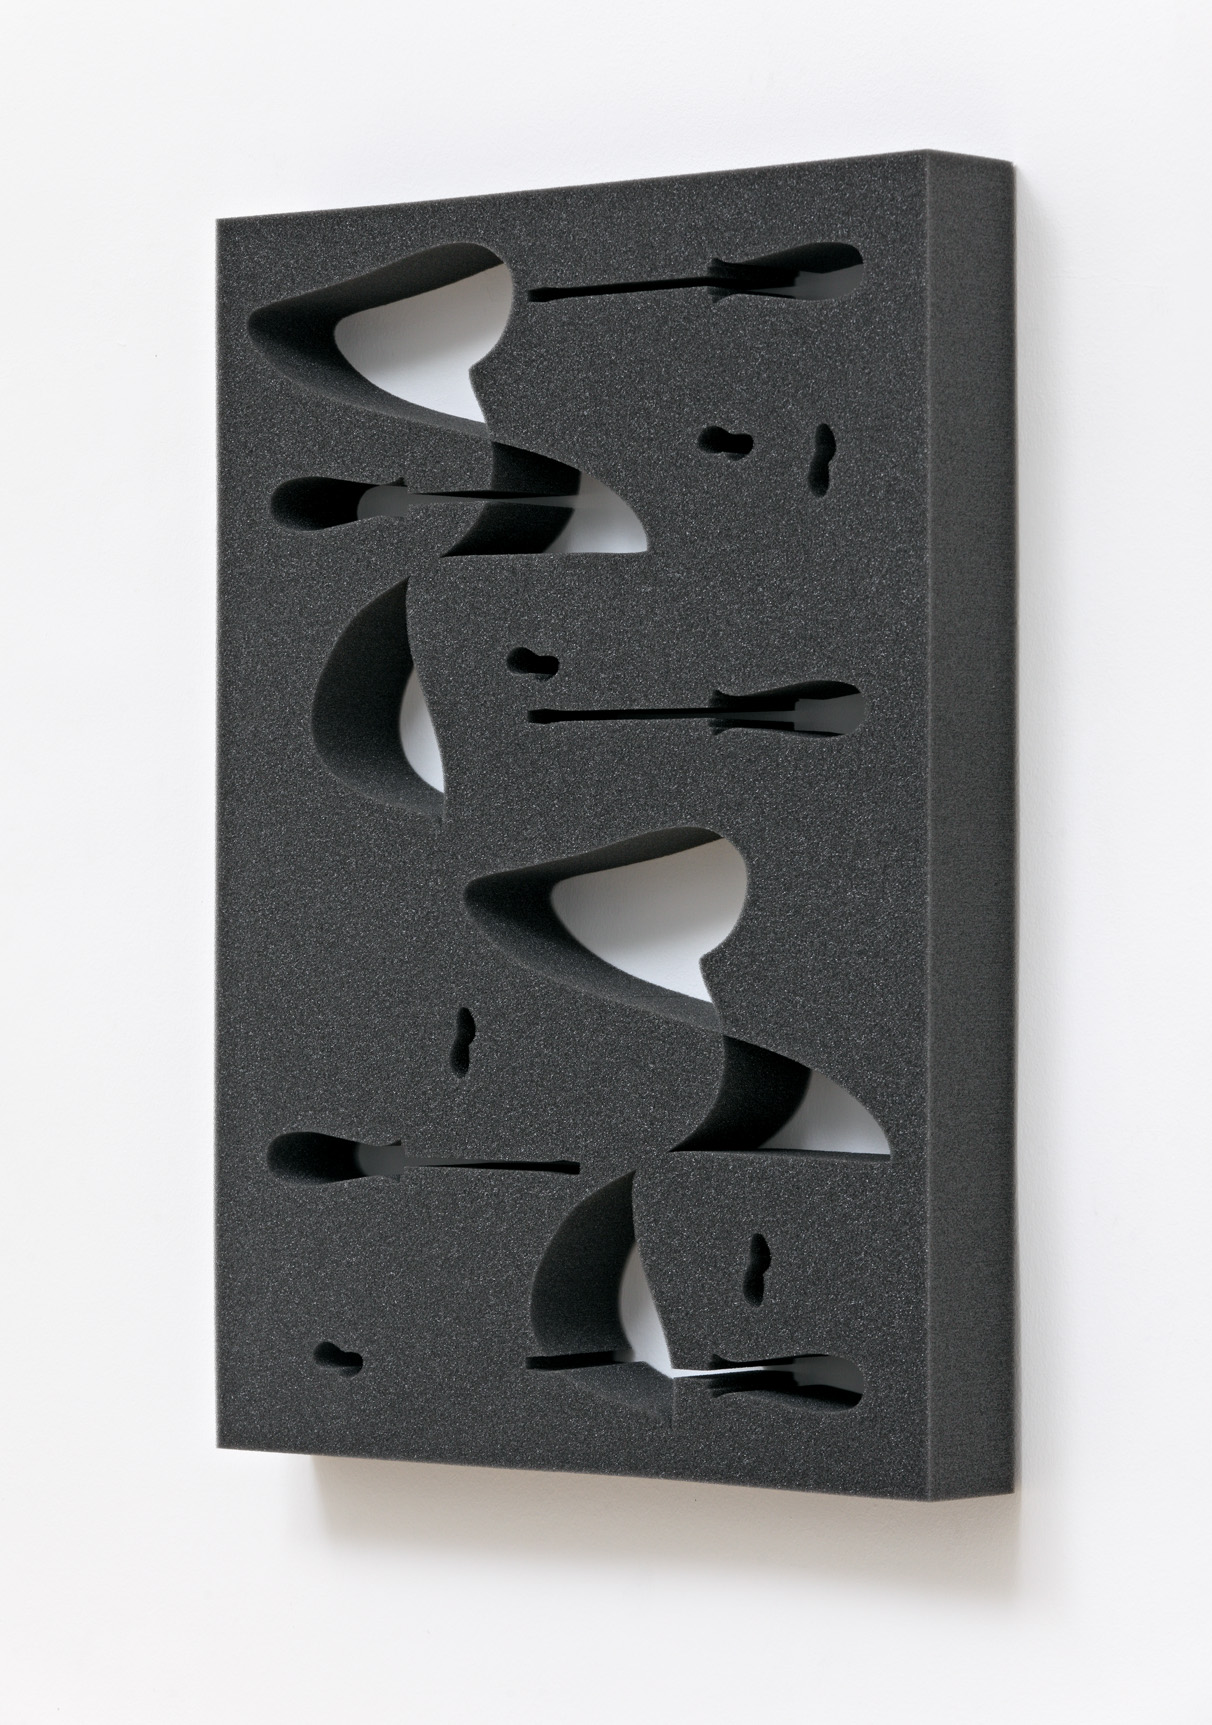 Nicholas Pelzer, 'Custom Utility' (2014) install view. Photo by Hans-Georg Gaul. Image courtesy Future Gallery.